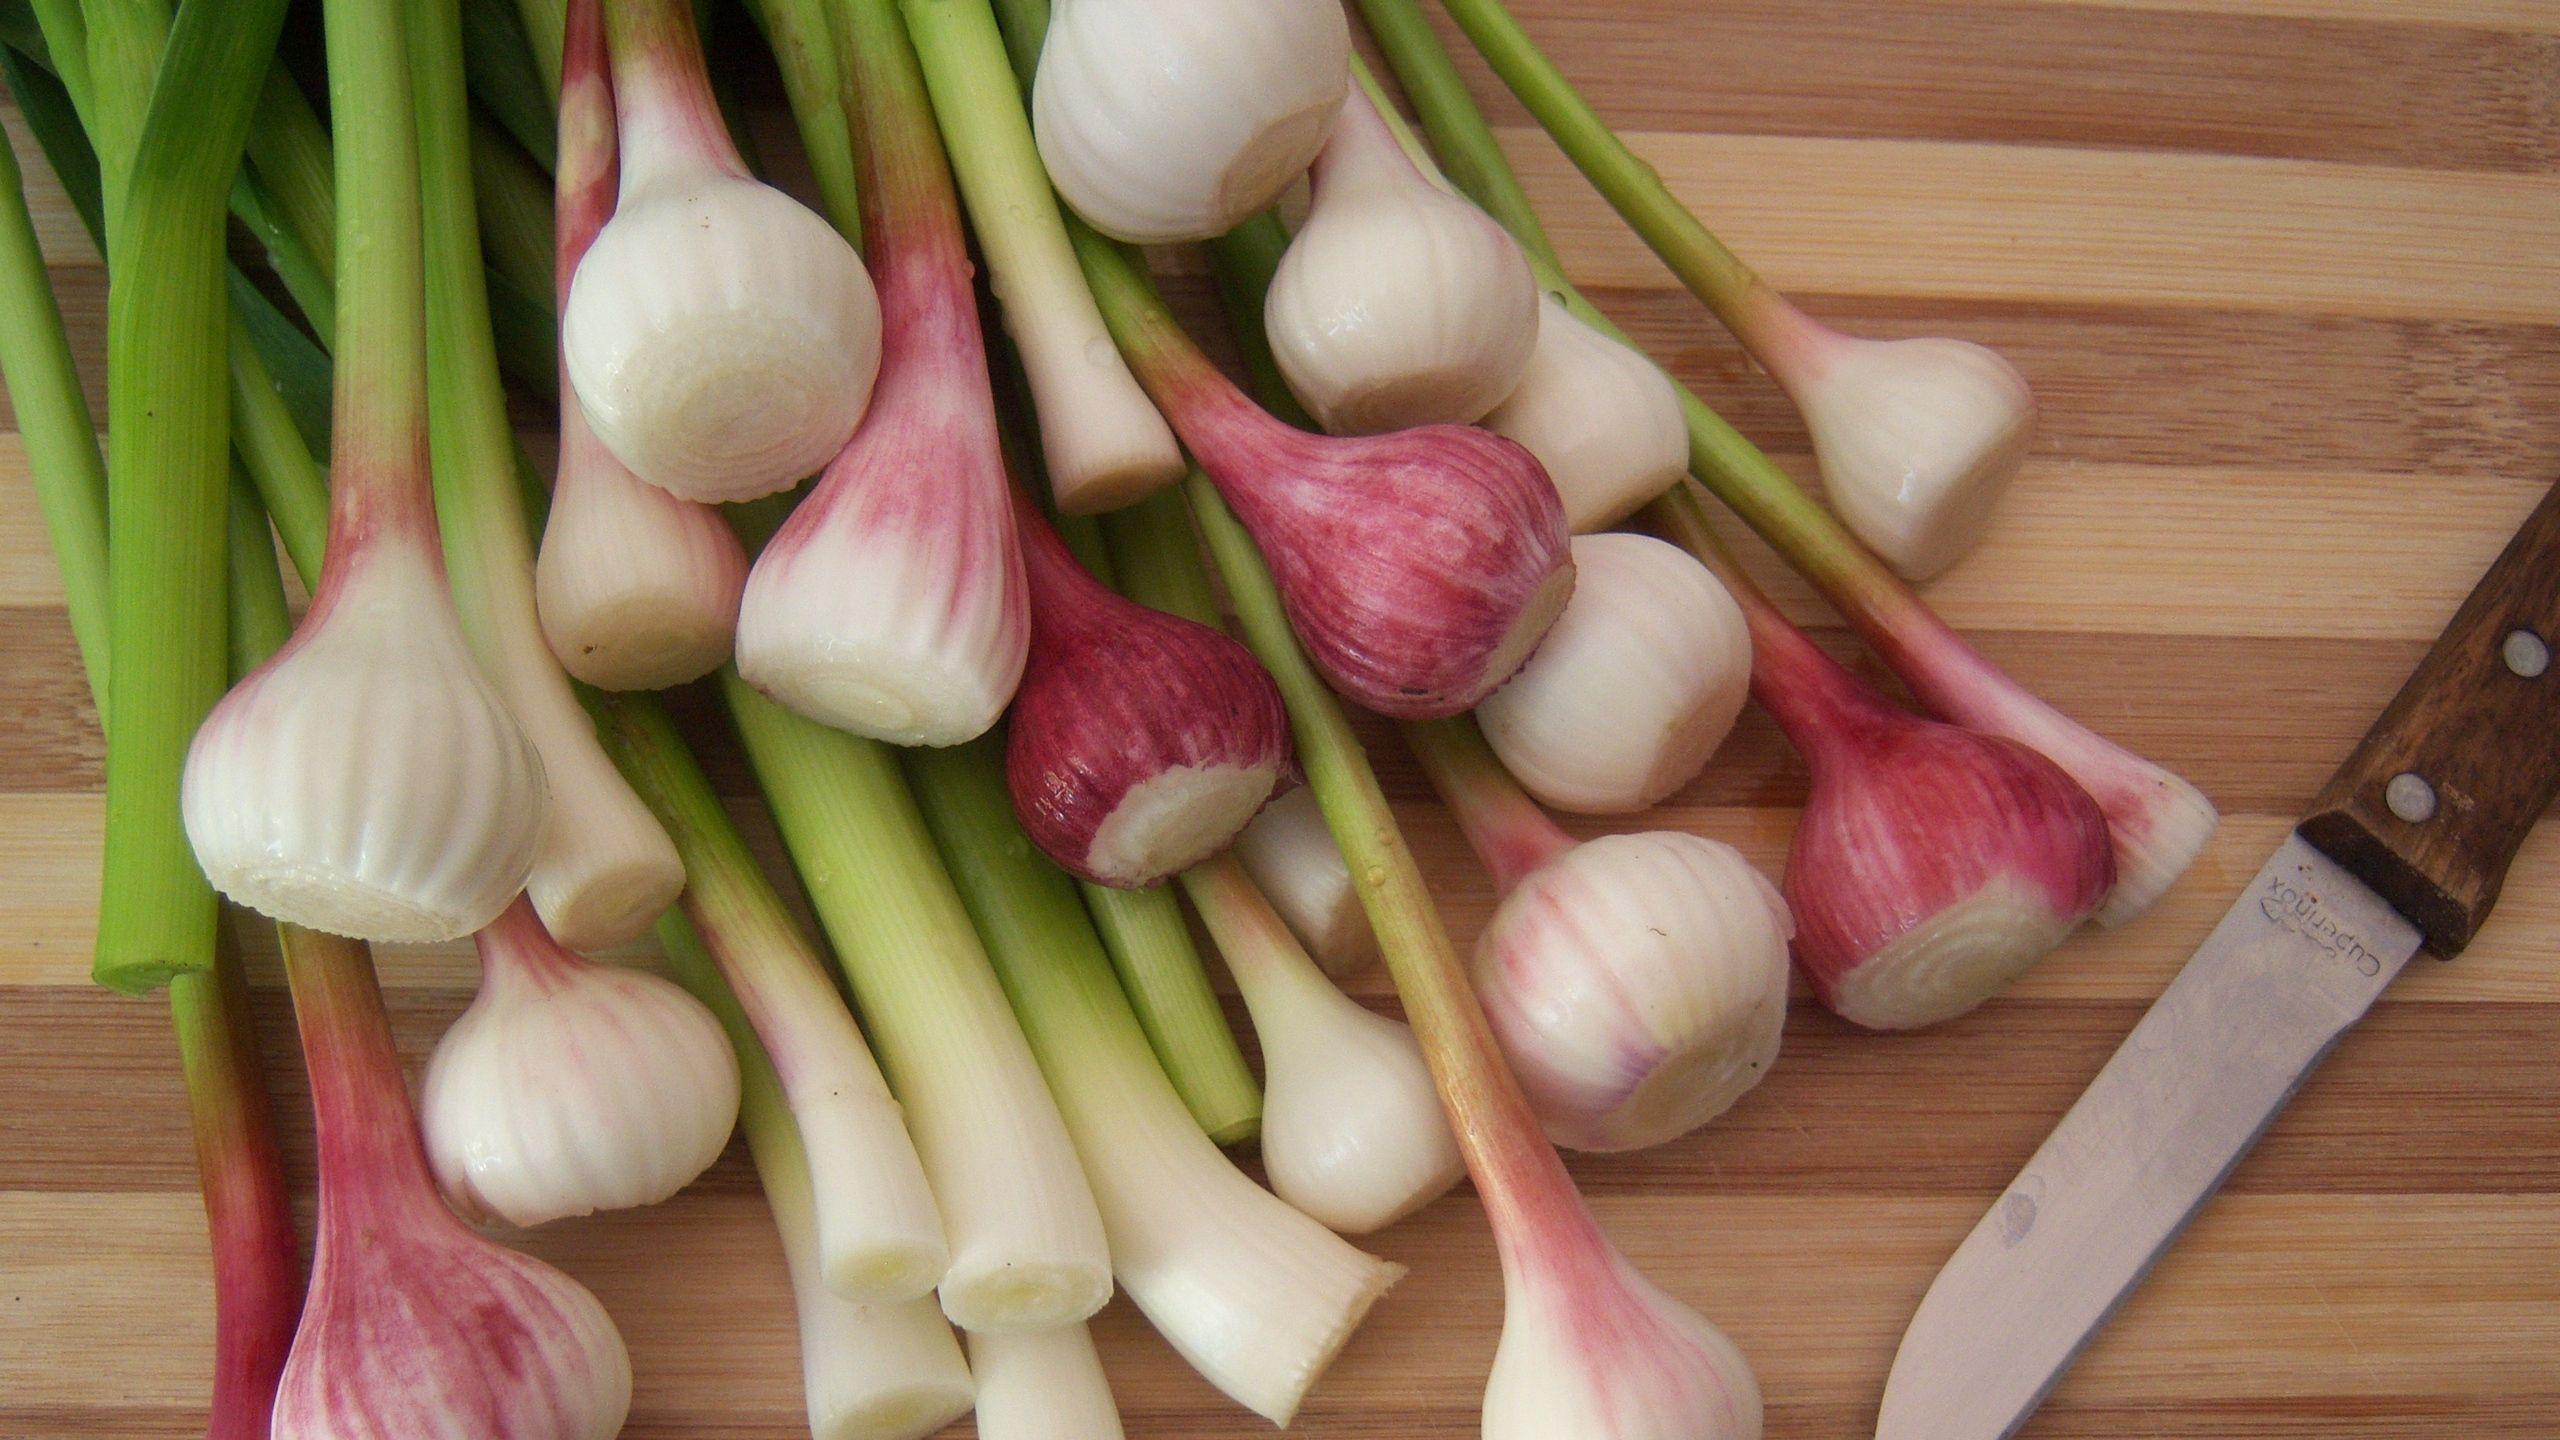 Download wallpaper 2560x1440 vegetables, garlic, cutting board